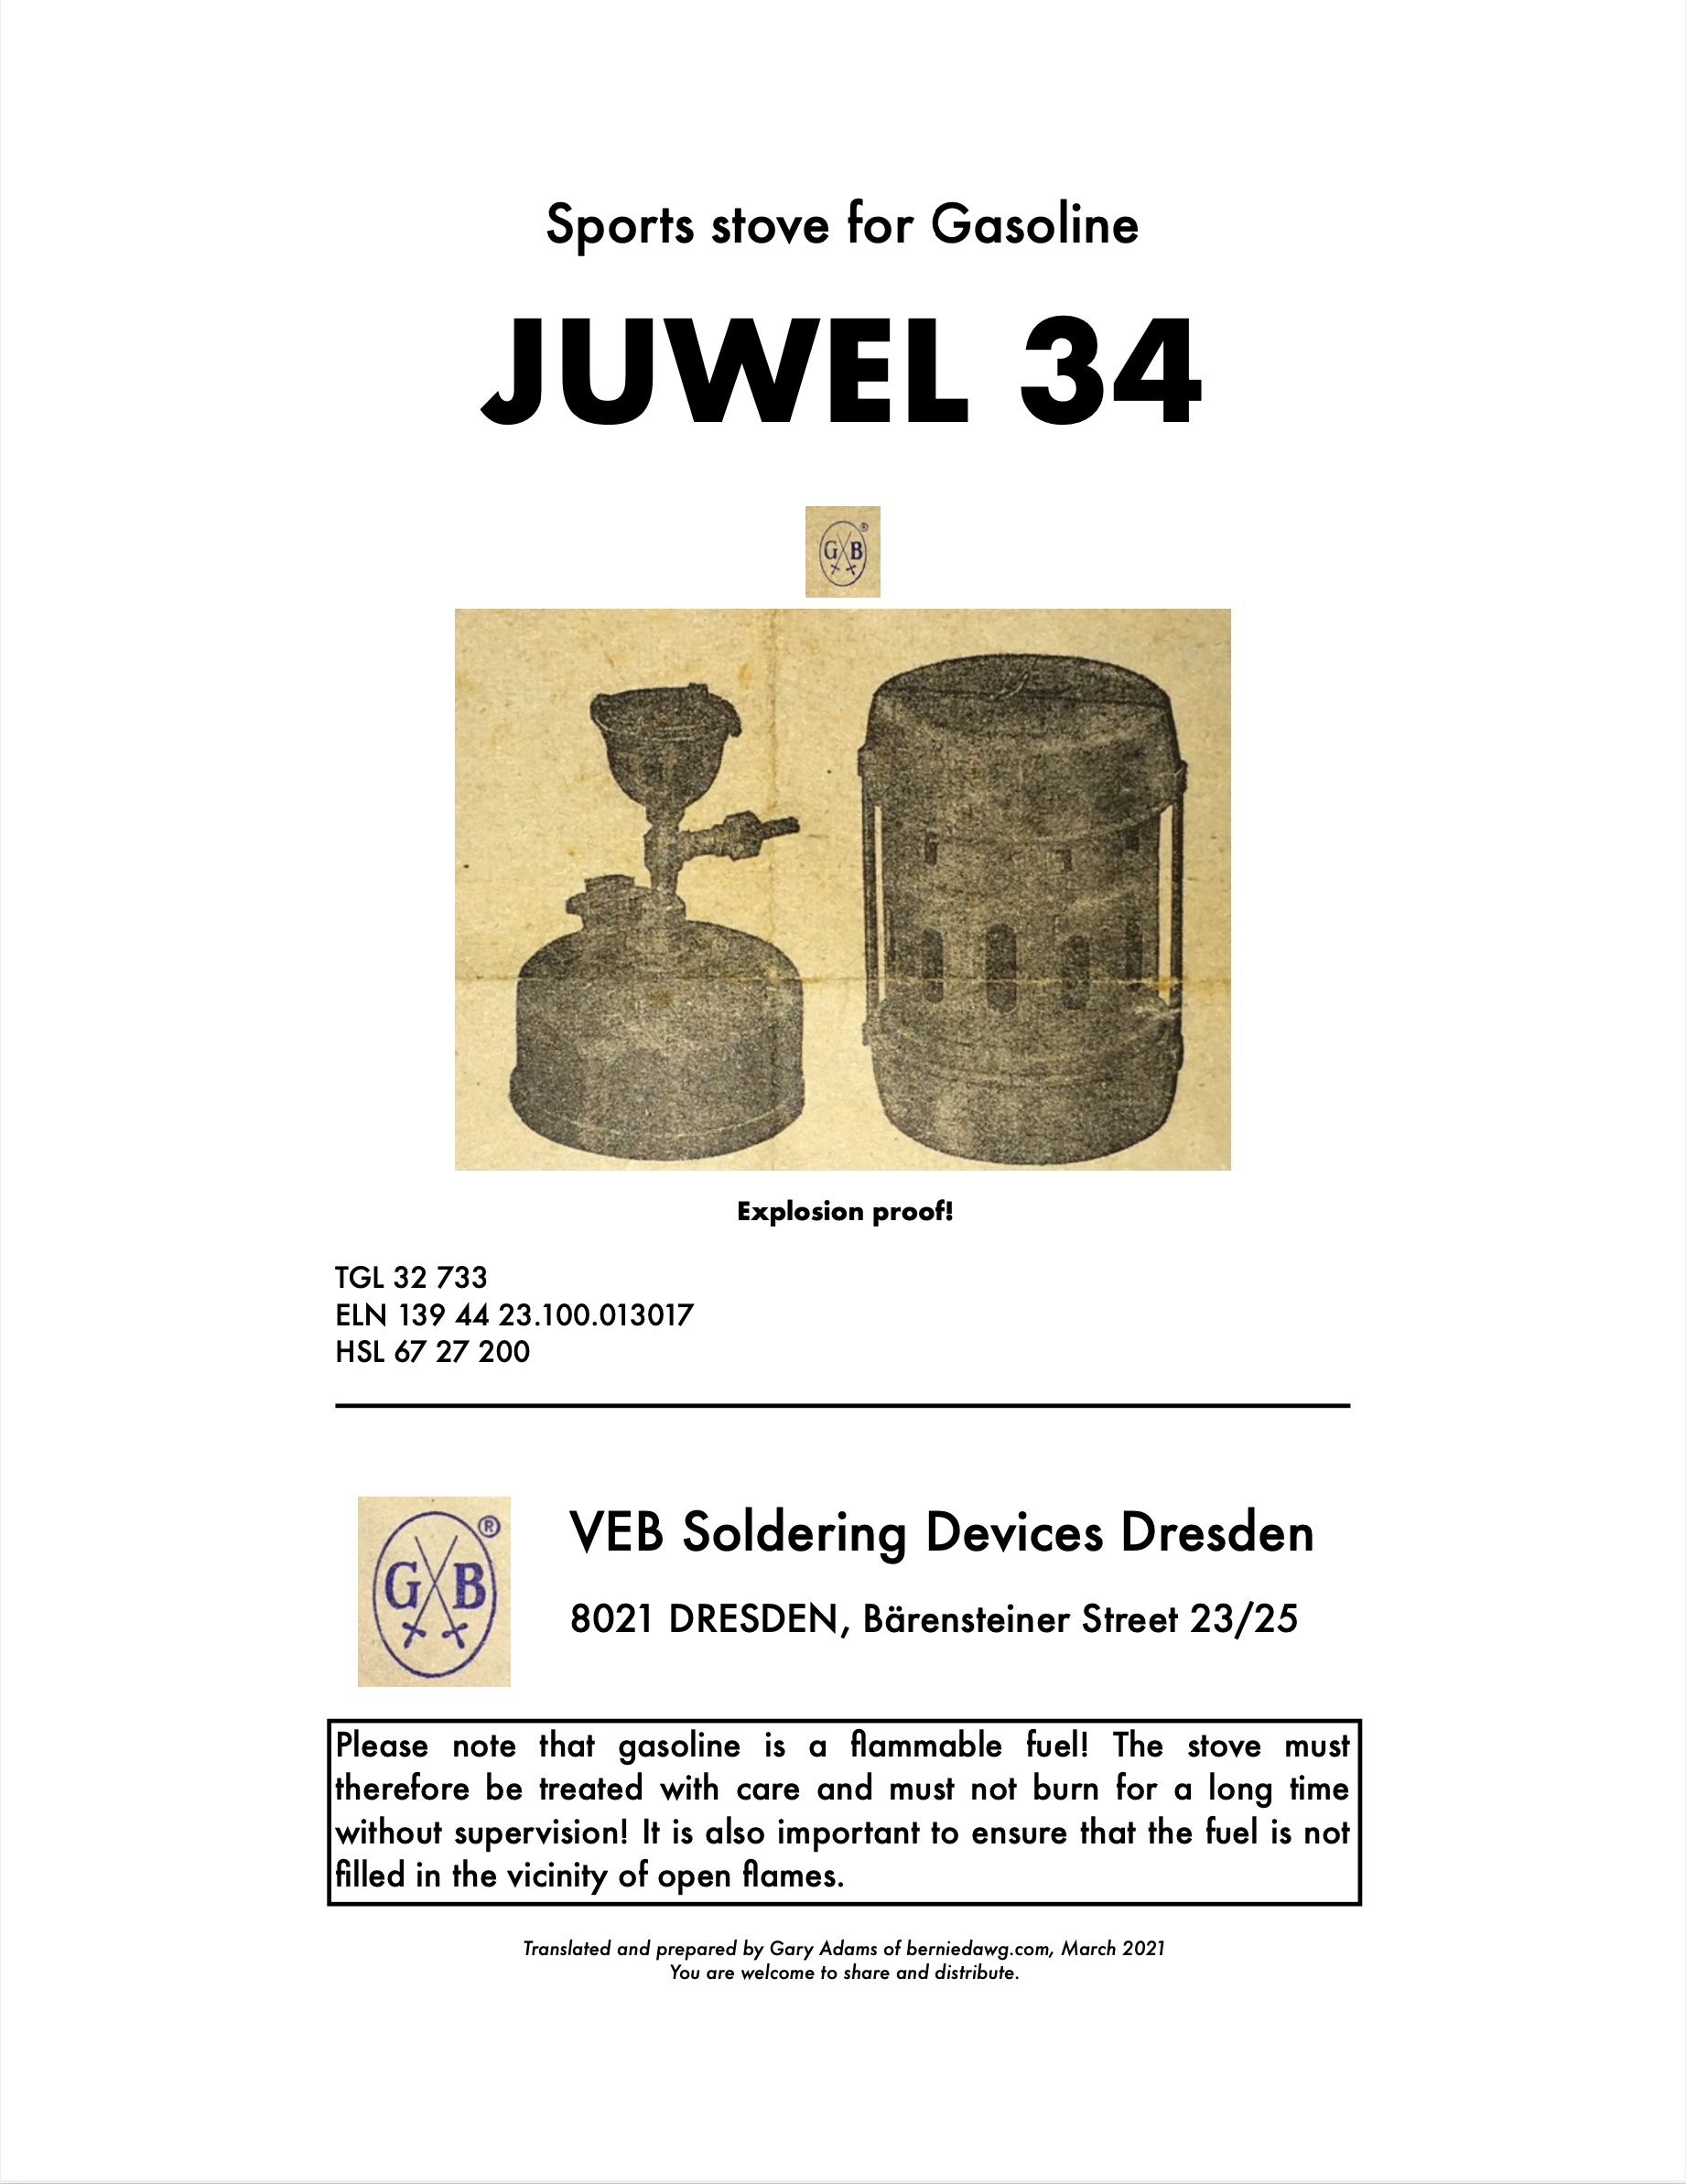 Juwel 34 Stove Manual and Instructions – Original German and 